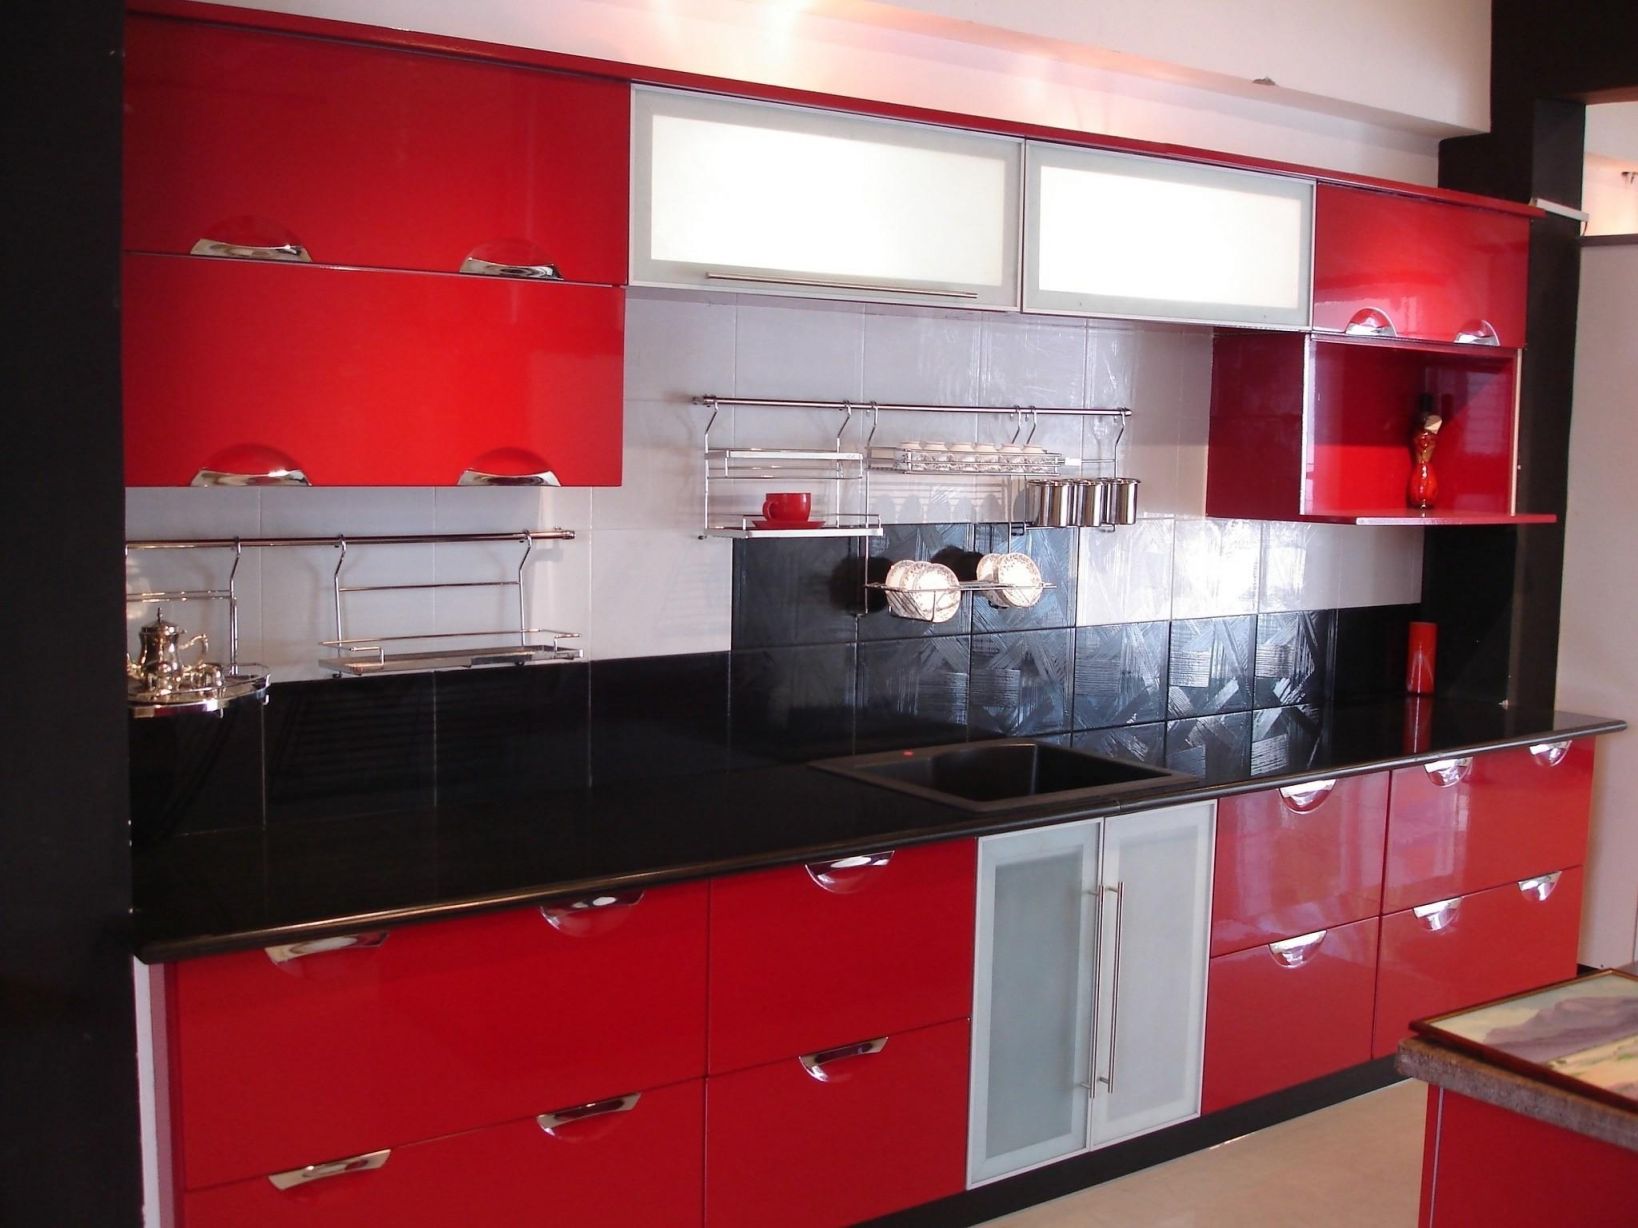  Wonderful Modular Kitchen Design Red And White 